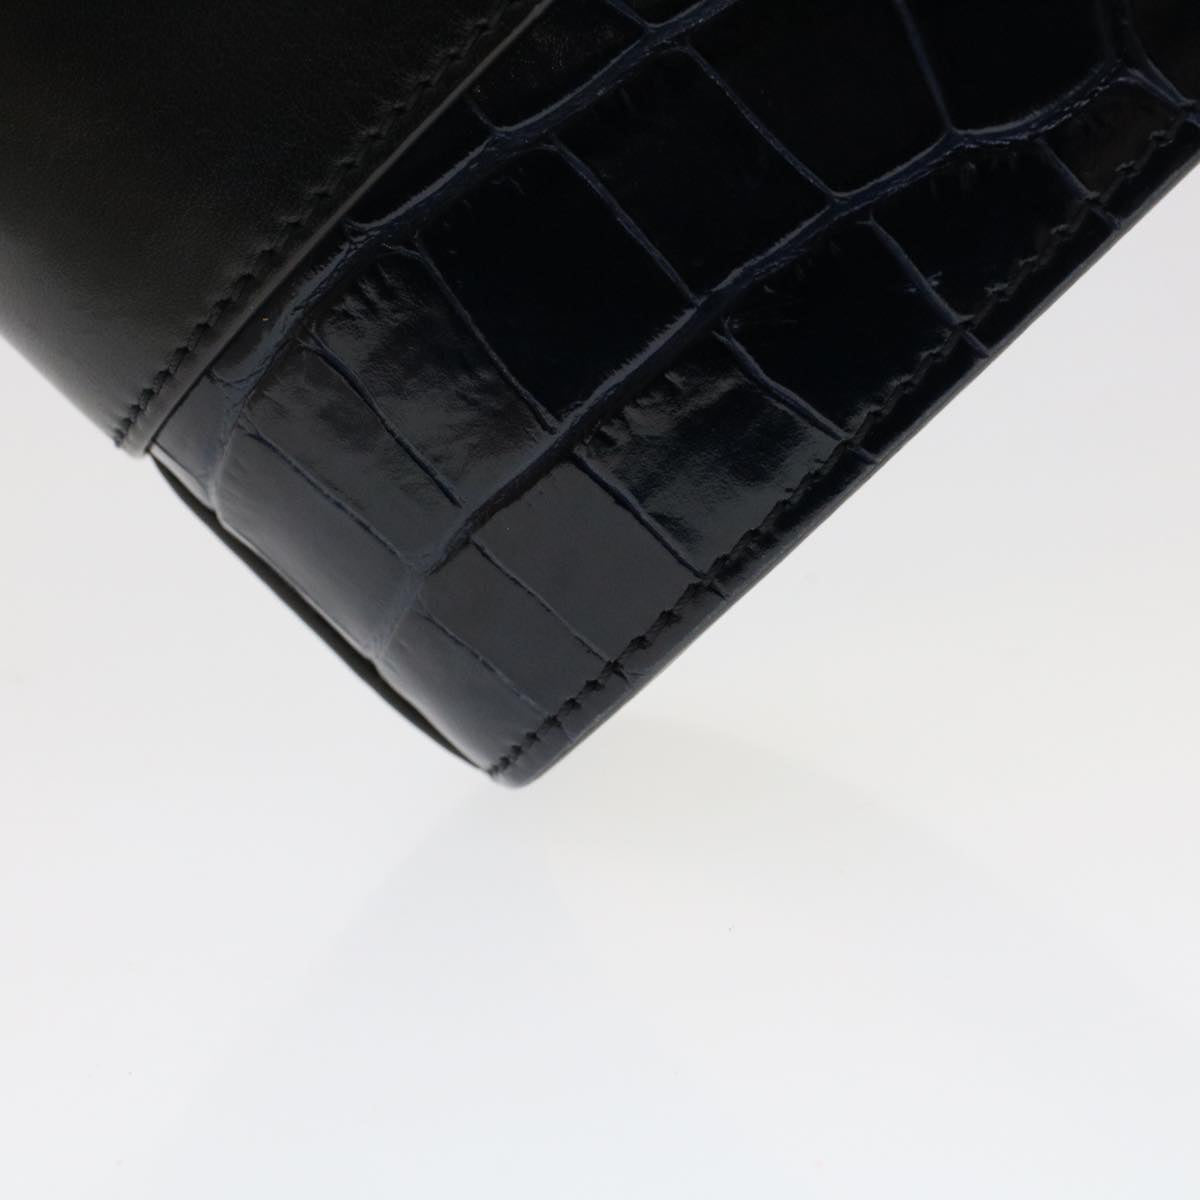 Chloe Abbey Rock Chain Hand Bag Calf Leather Navy Auth 49116a